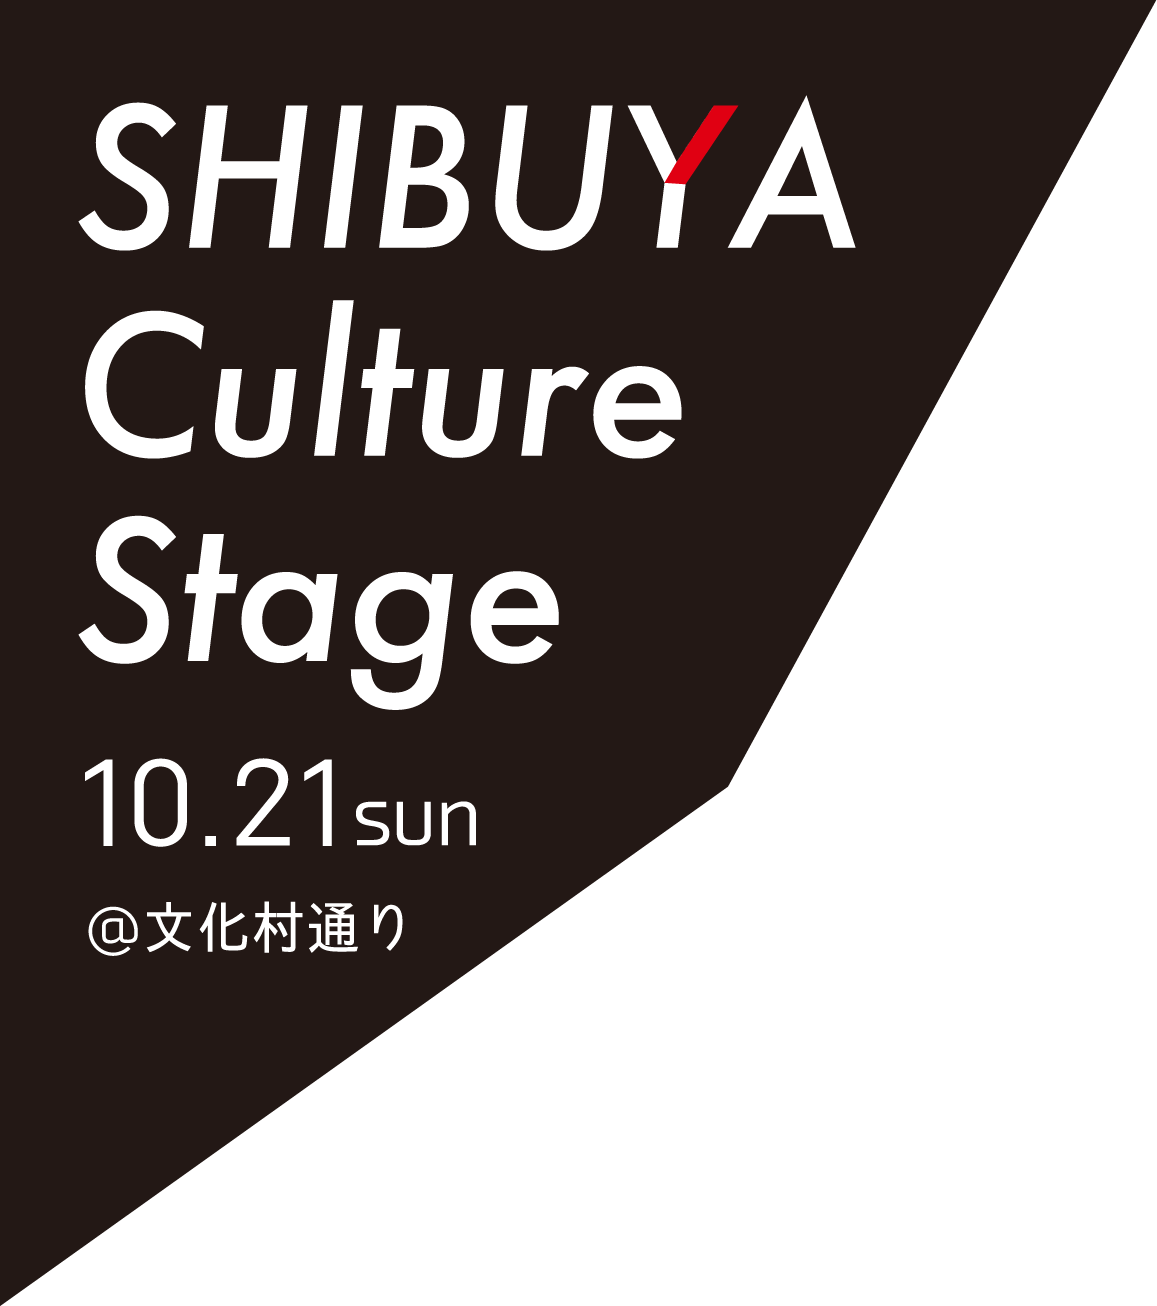 SHIBUYA Culture Stage 10.21sun @文化村通り